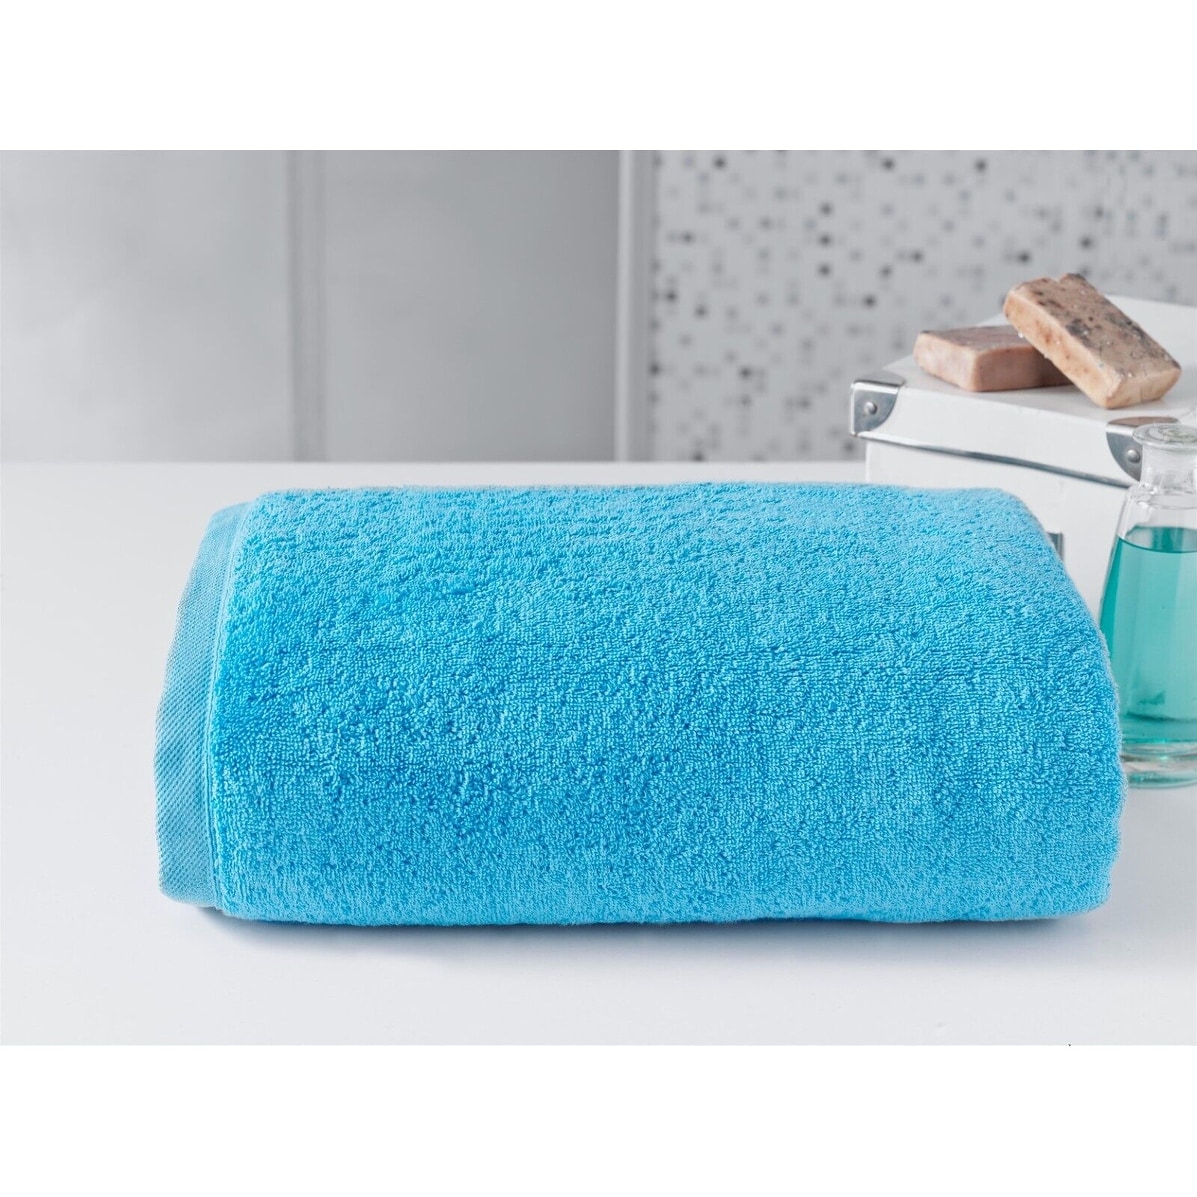 https://ak1.ostkcdn.com/images/products/is/images/direct/6f58f6be1733ba2760b5e4b1729070801235b5ce/Royal-Turkish-Towel-Luxury-Cambridge-Cotton-Jumbo-SPA-Bath-Sheet.jpg